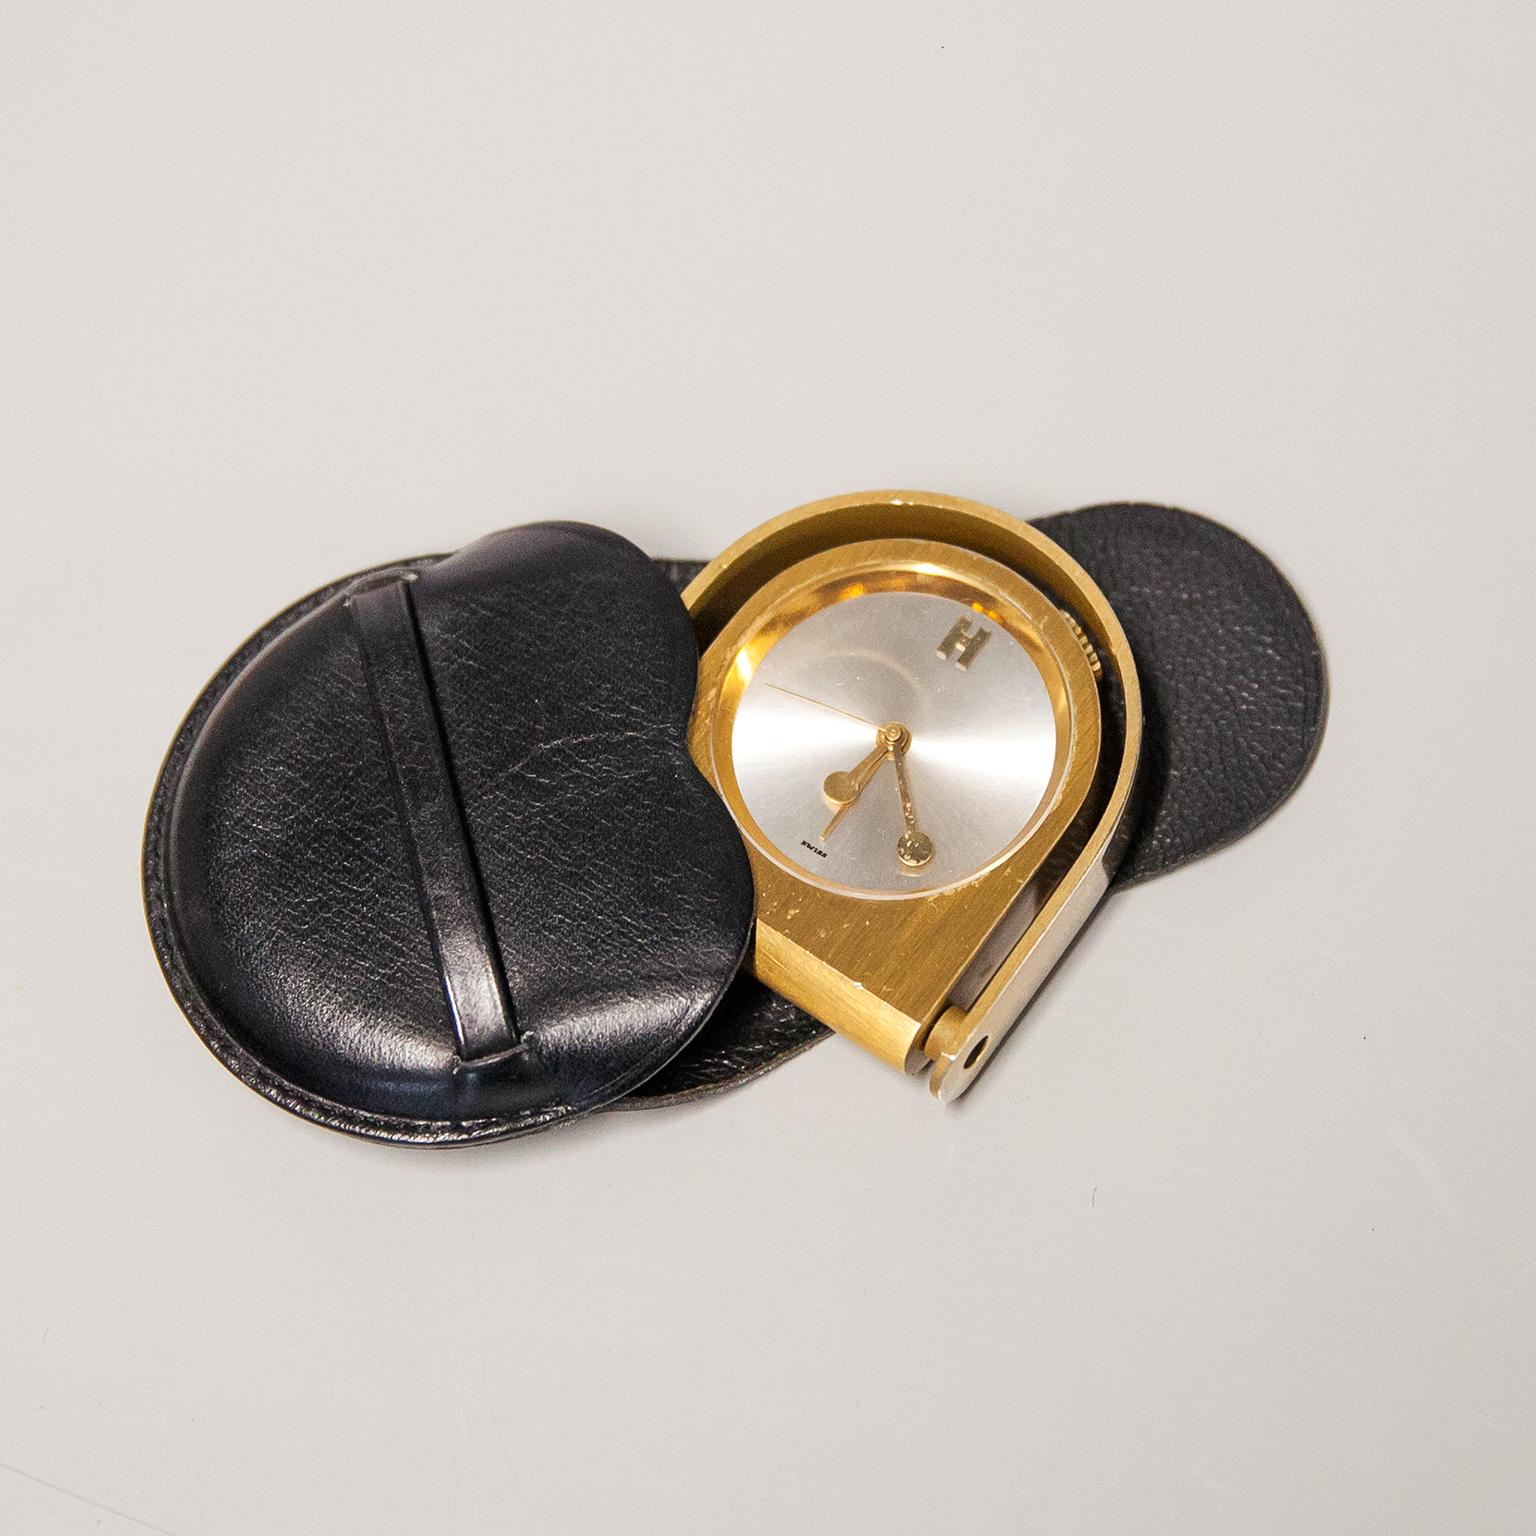 Hermès Stirup Clip Travel Alarm Clock In Good Condition For Sale In Munich, DE